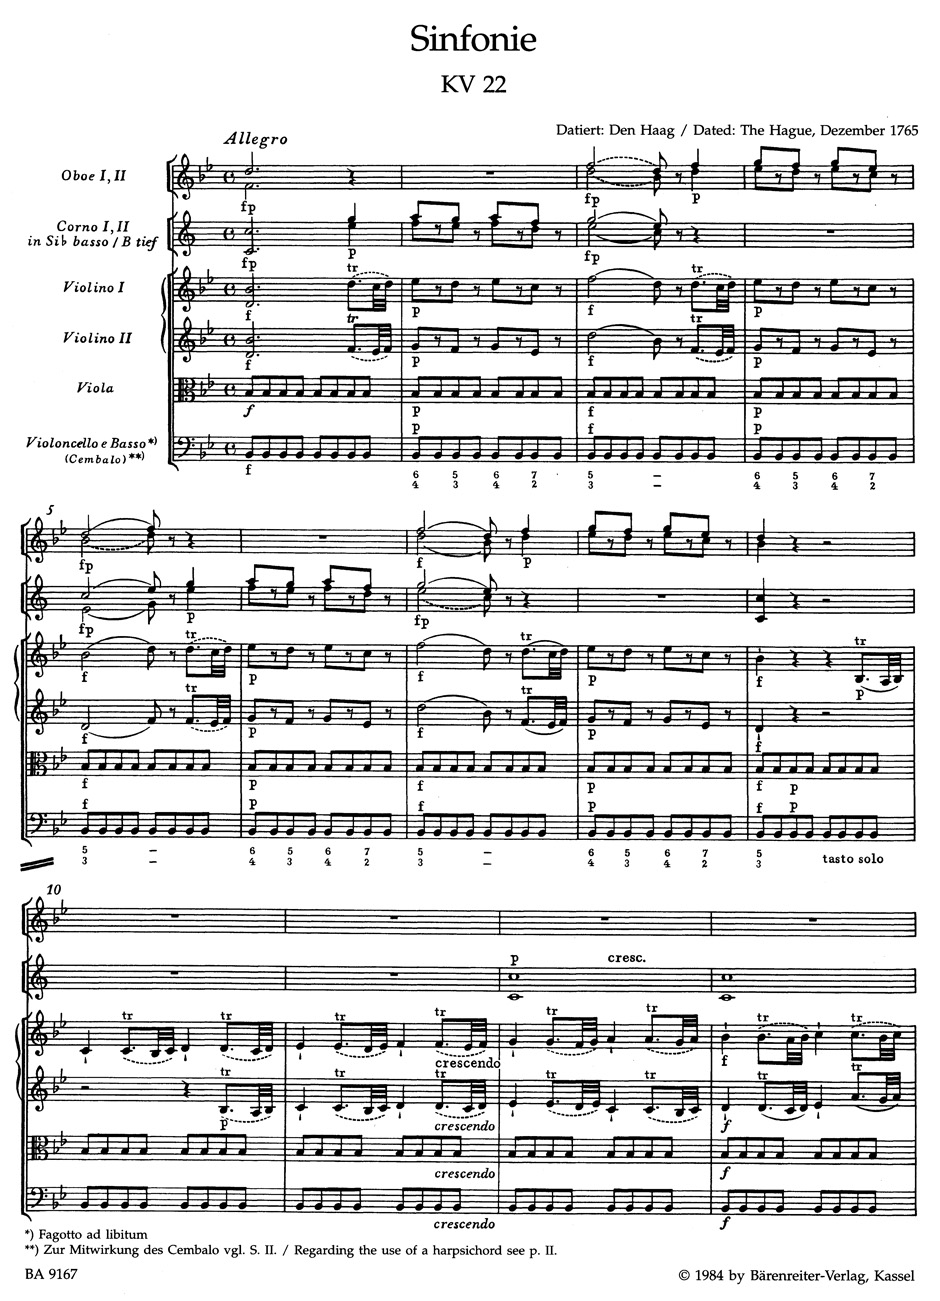 wolfgang-amadeus-mozart-sinfonie-no-5-kv-22-b-dur-_0006.JPG